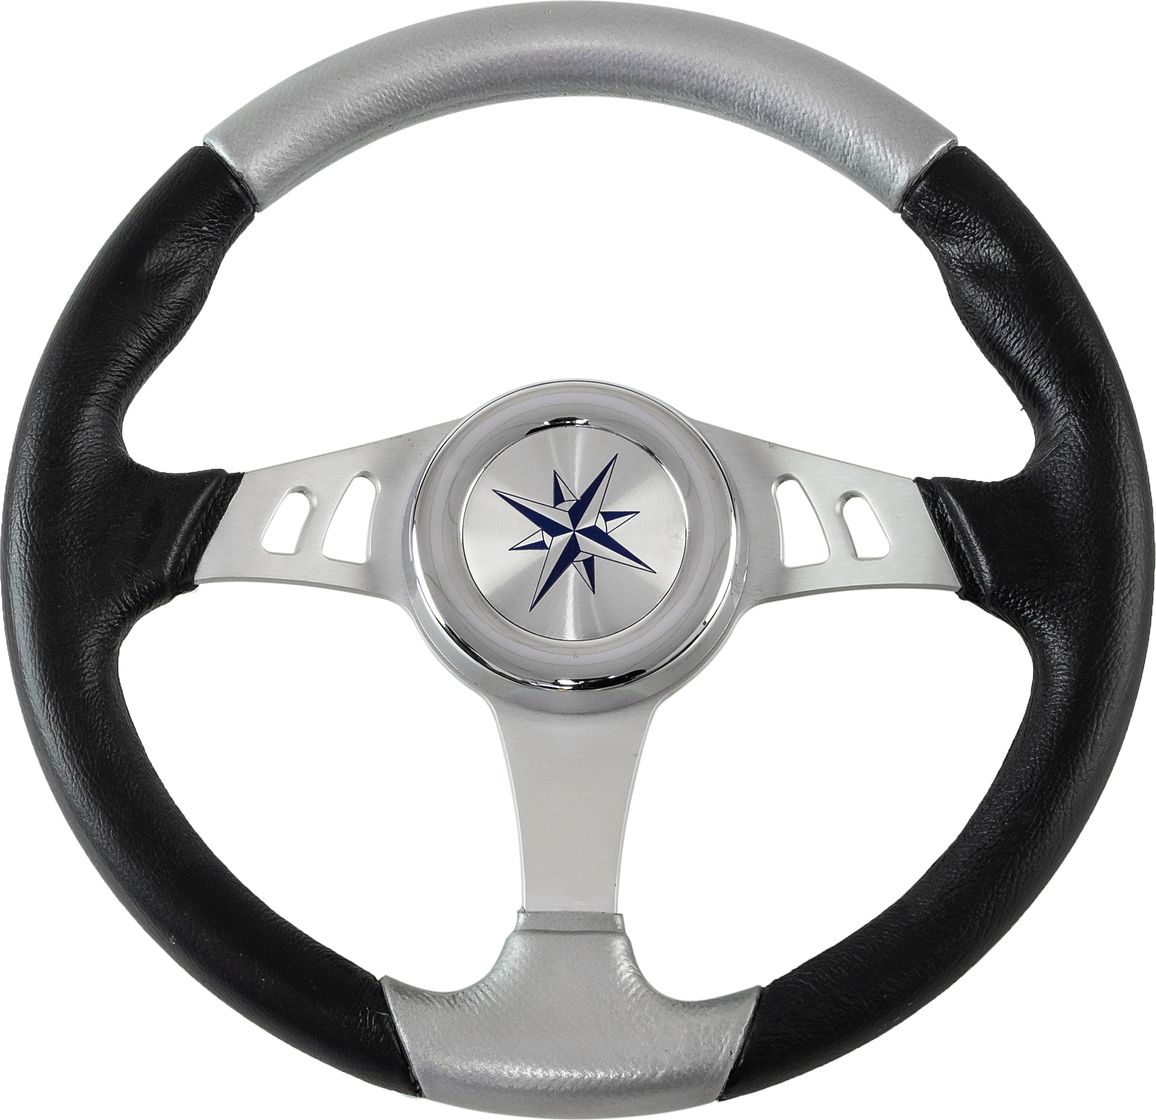 Рулевое колесо SKIPPER обод черносеребристый, спицы серебряные д. 350 мм VN835001-93